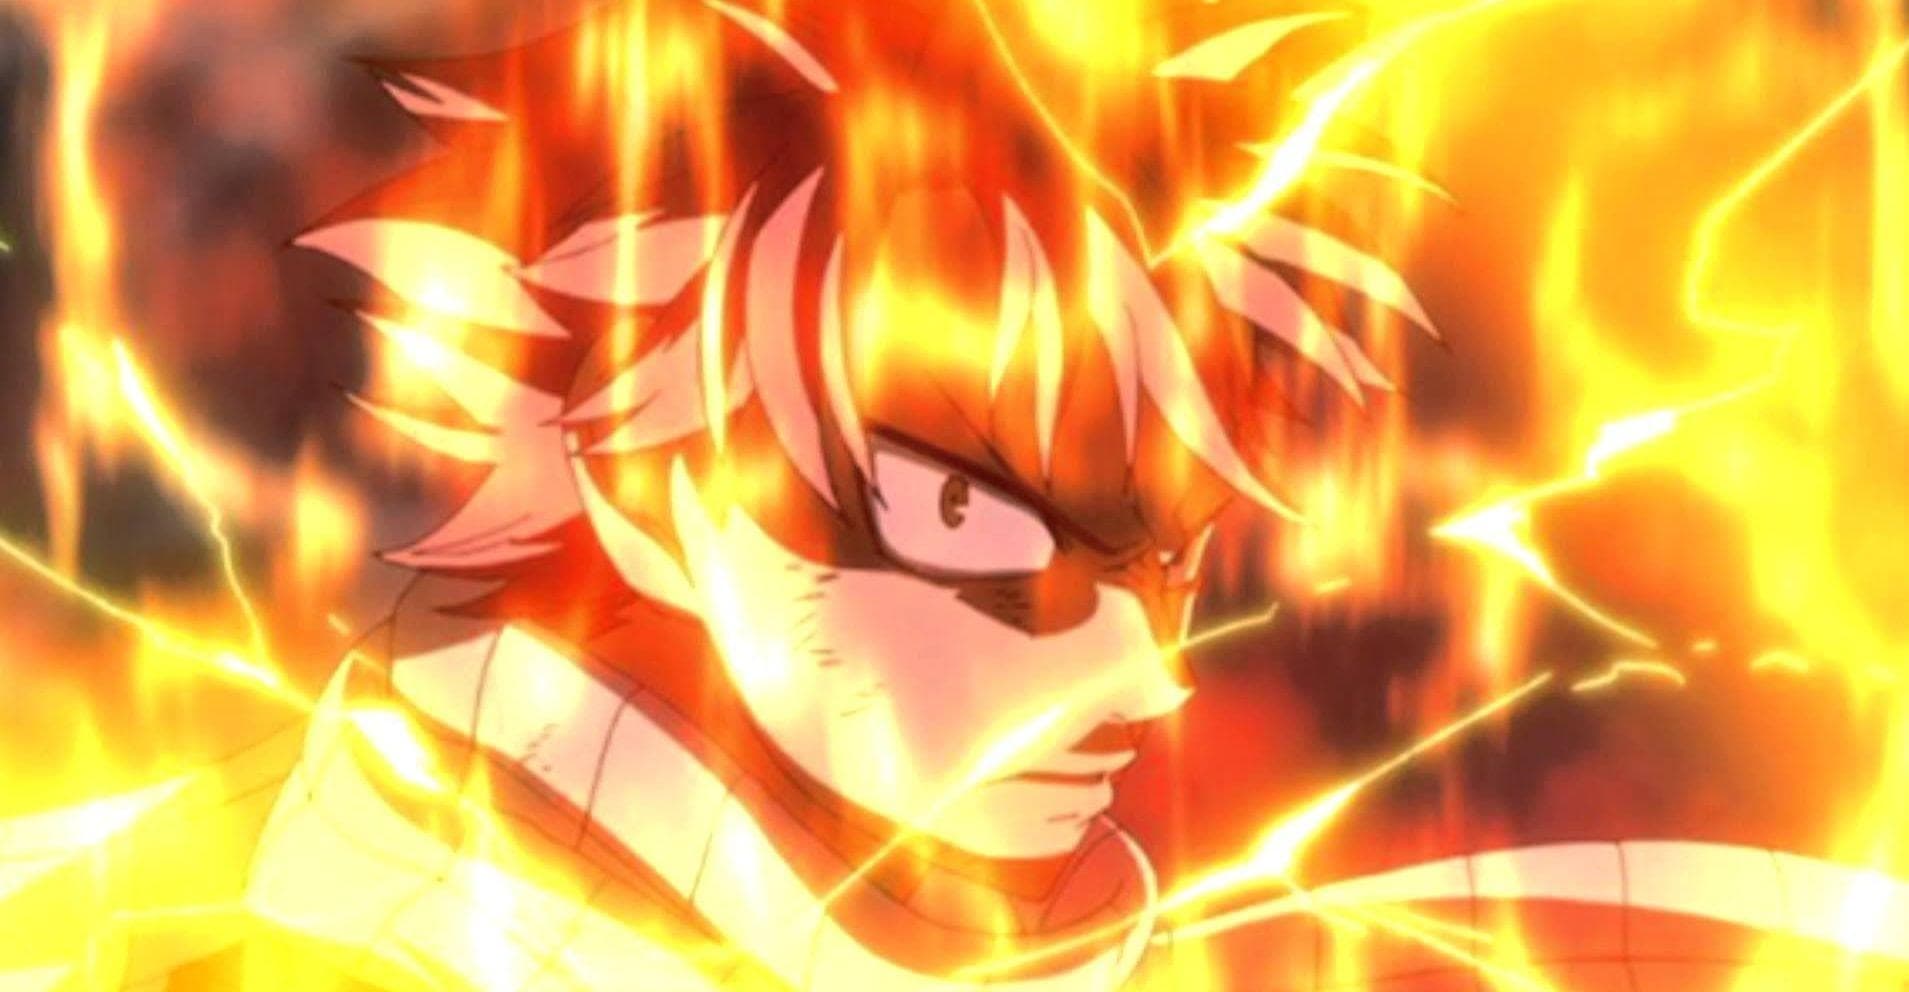 NATSU--LIGHTNING FLAME DRAGON MODE :D  Fairy tail anime, Fairy tail guild,  Hot anime boy